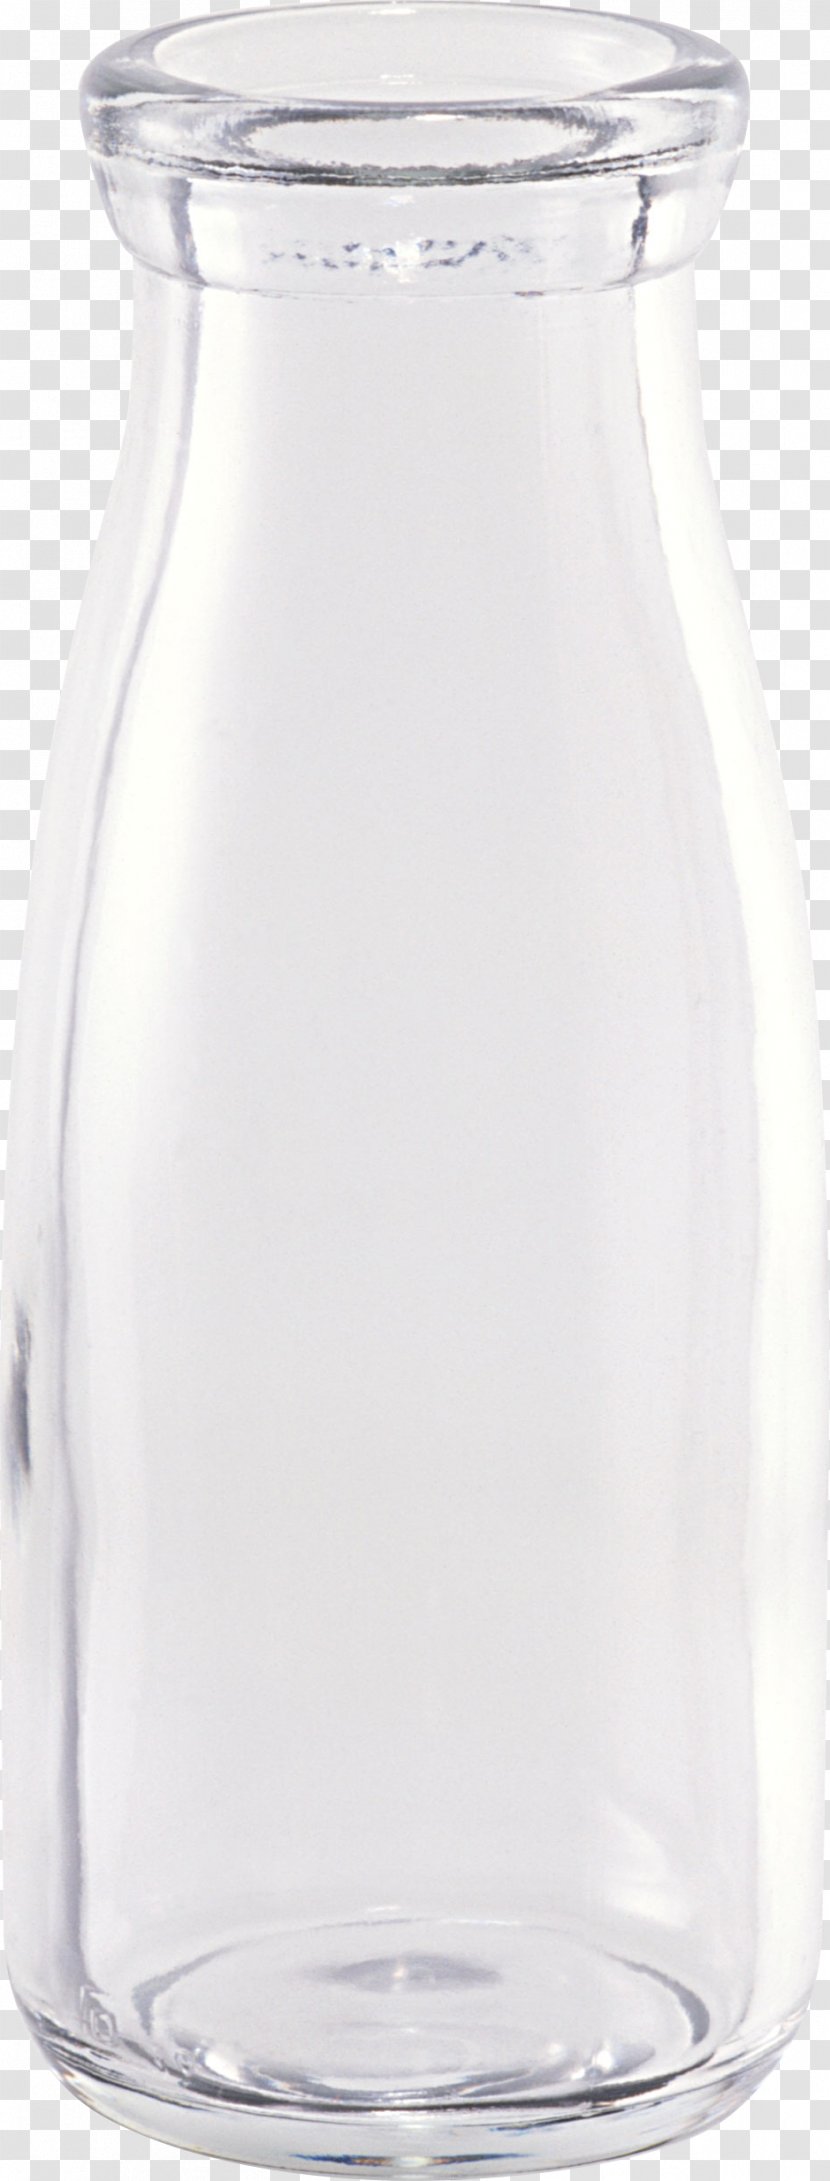 Glass Bottle Clip Art - Drinkware - Empty Image Transparent PNG